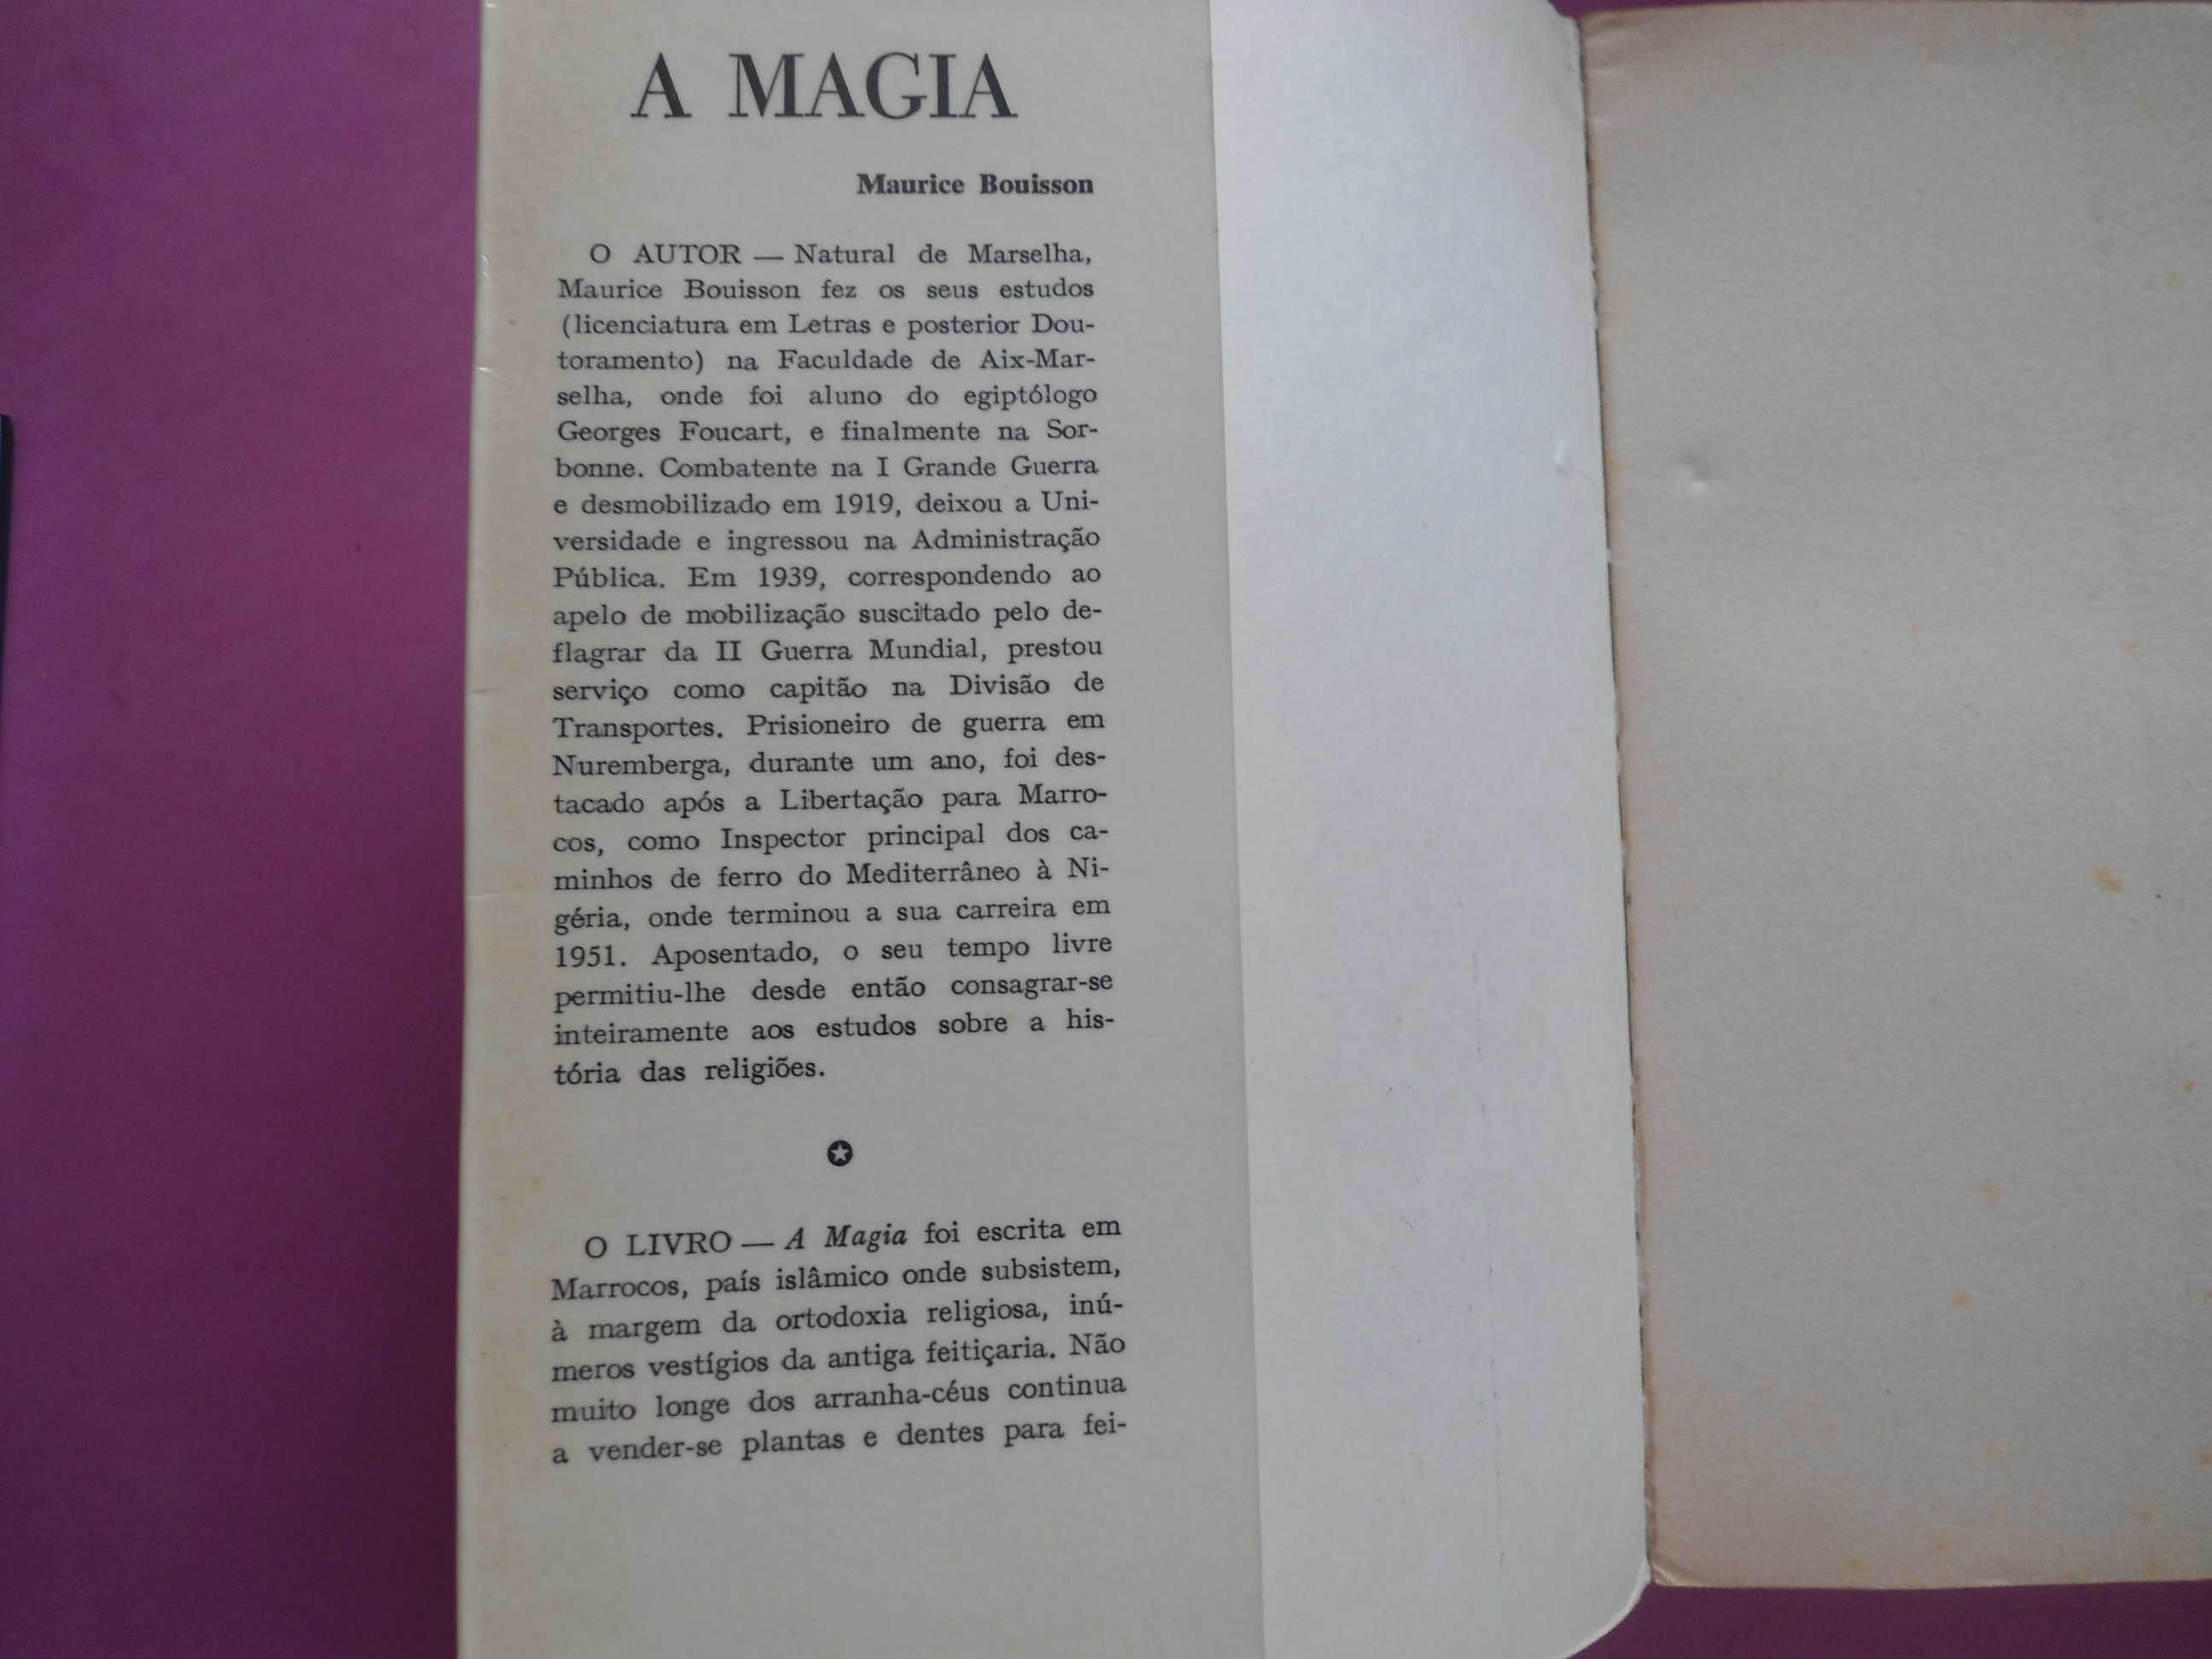 A Magia por Maurice Bouisson